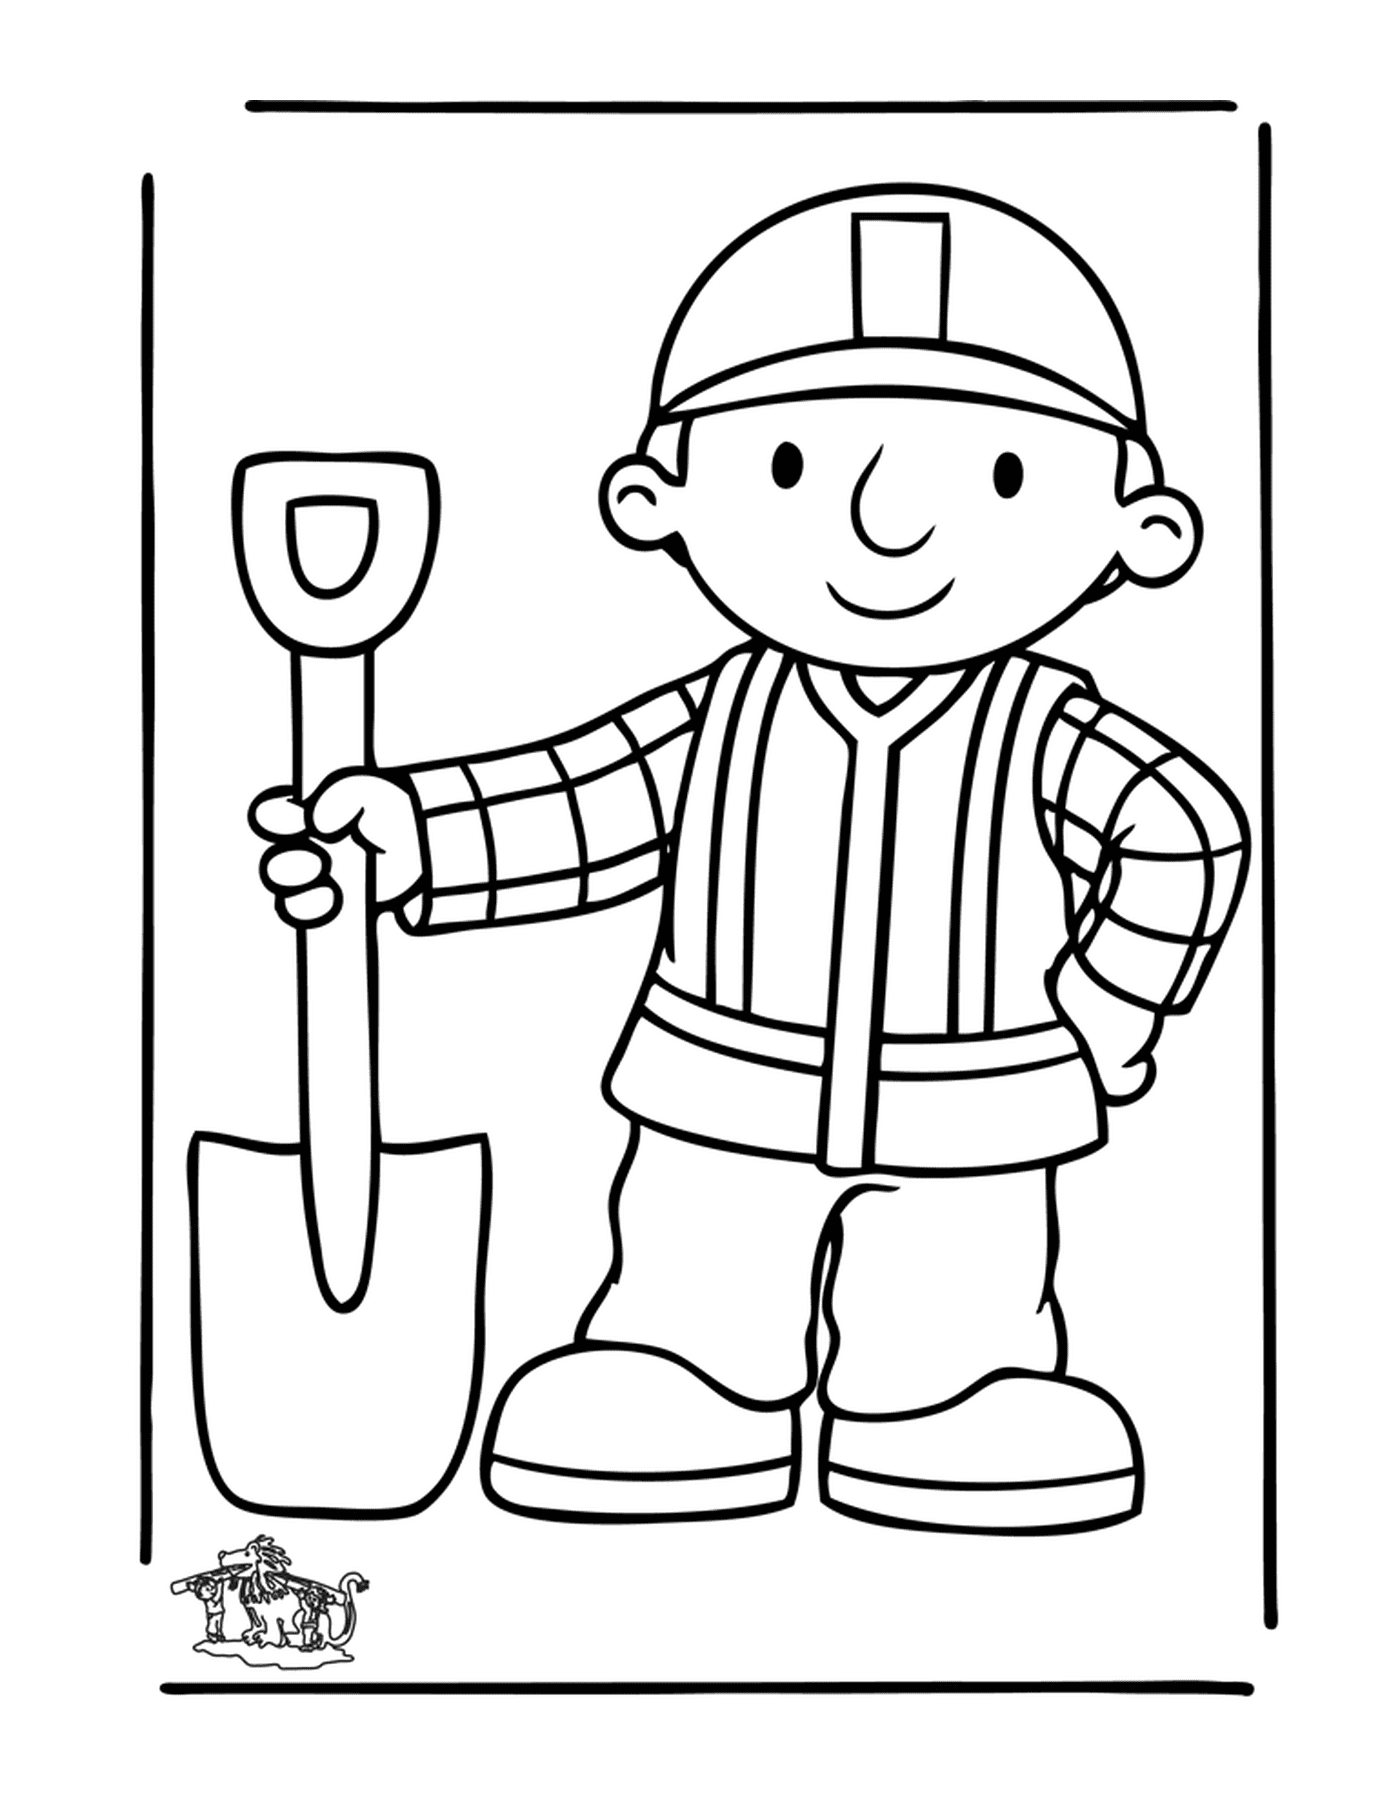  A man holding a shovel 